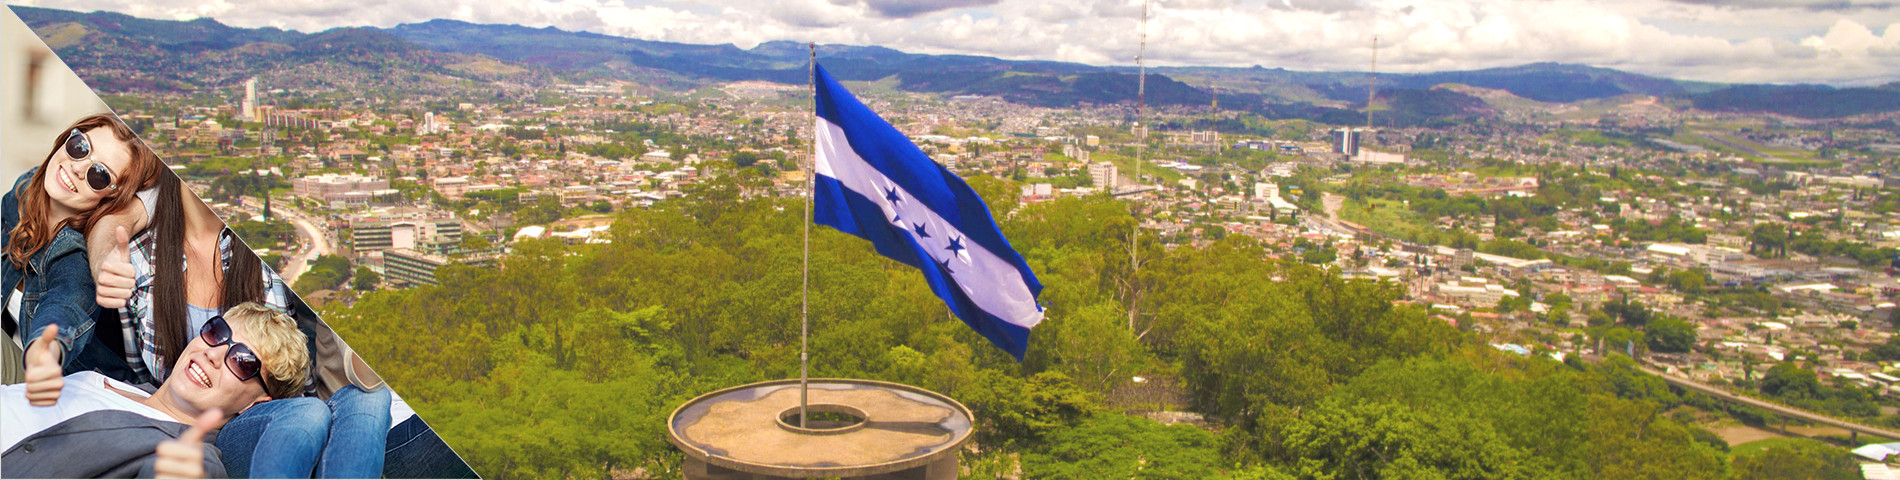 Honduras - School Trips / Groups